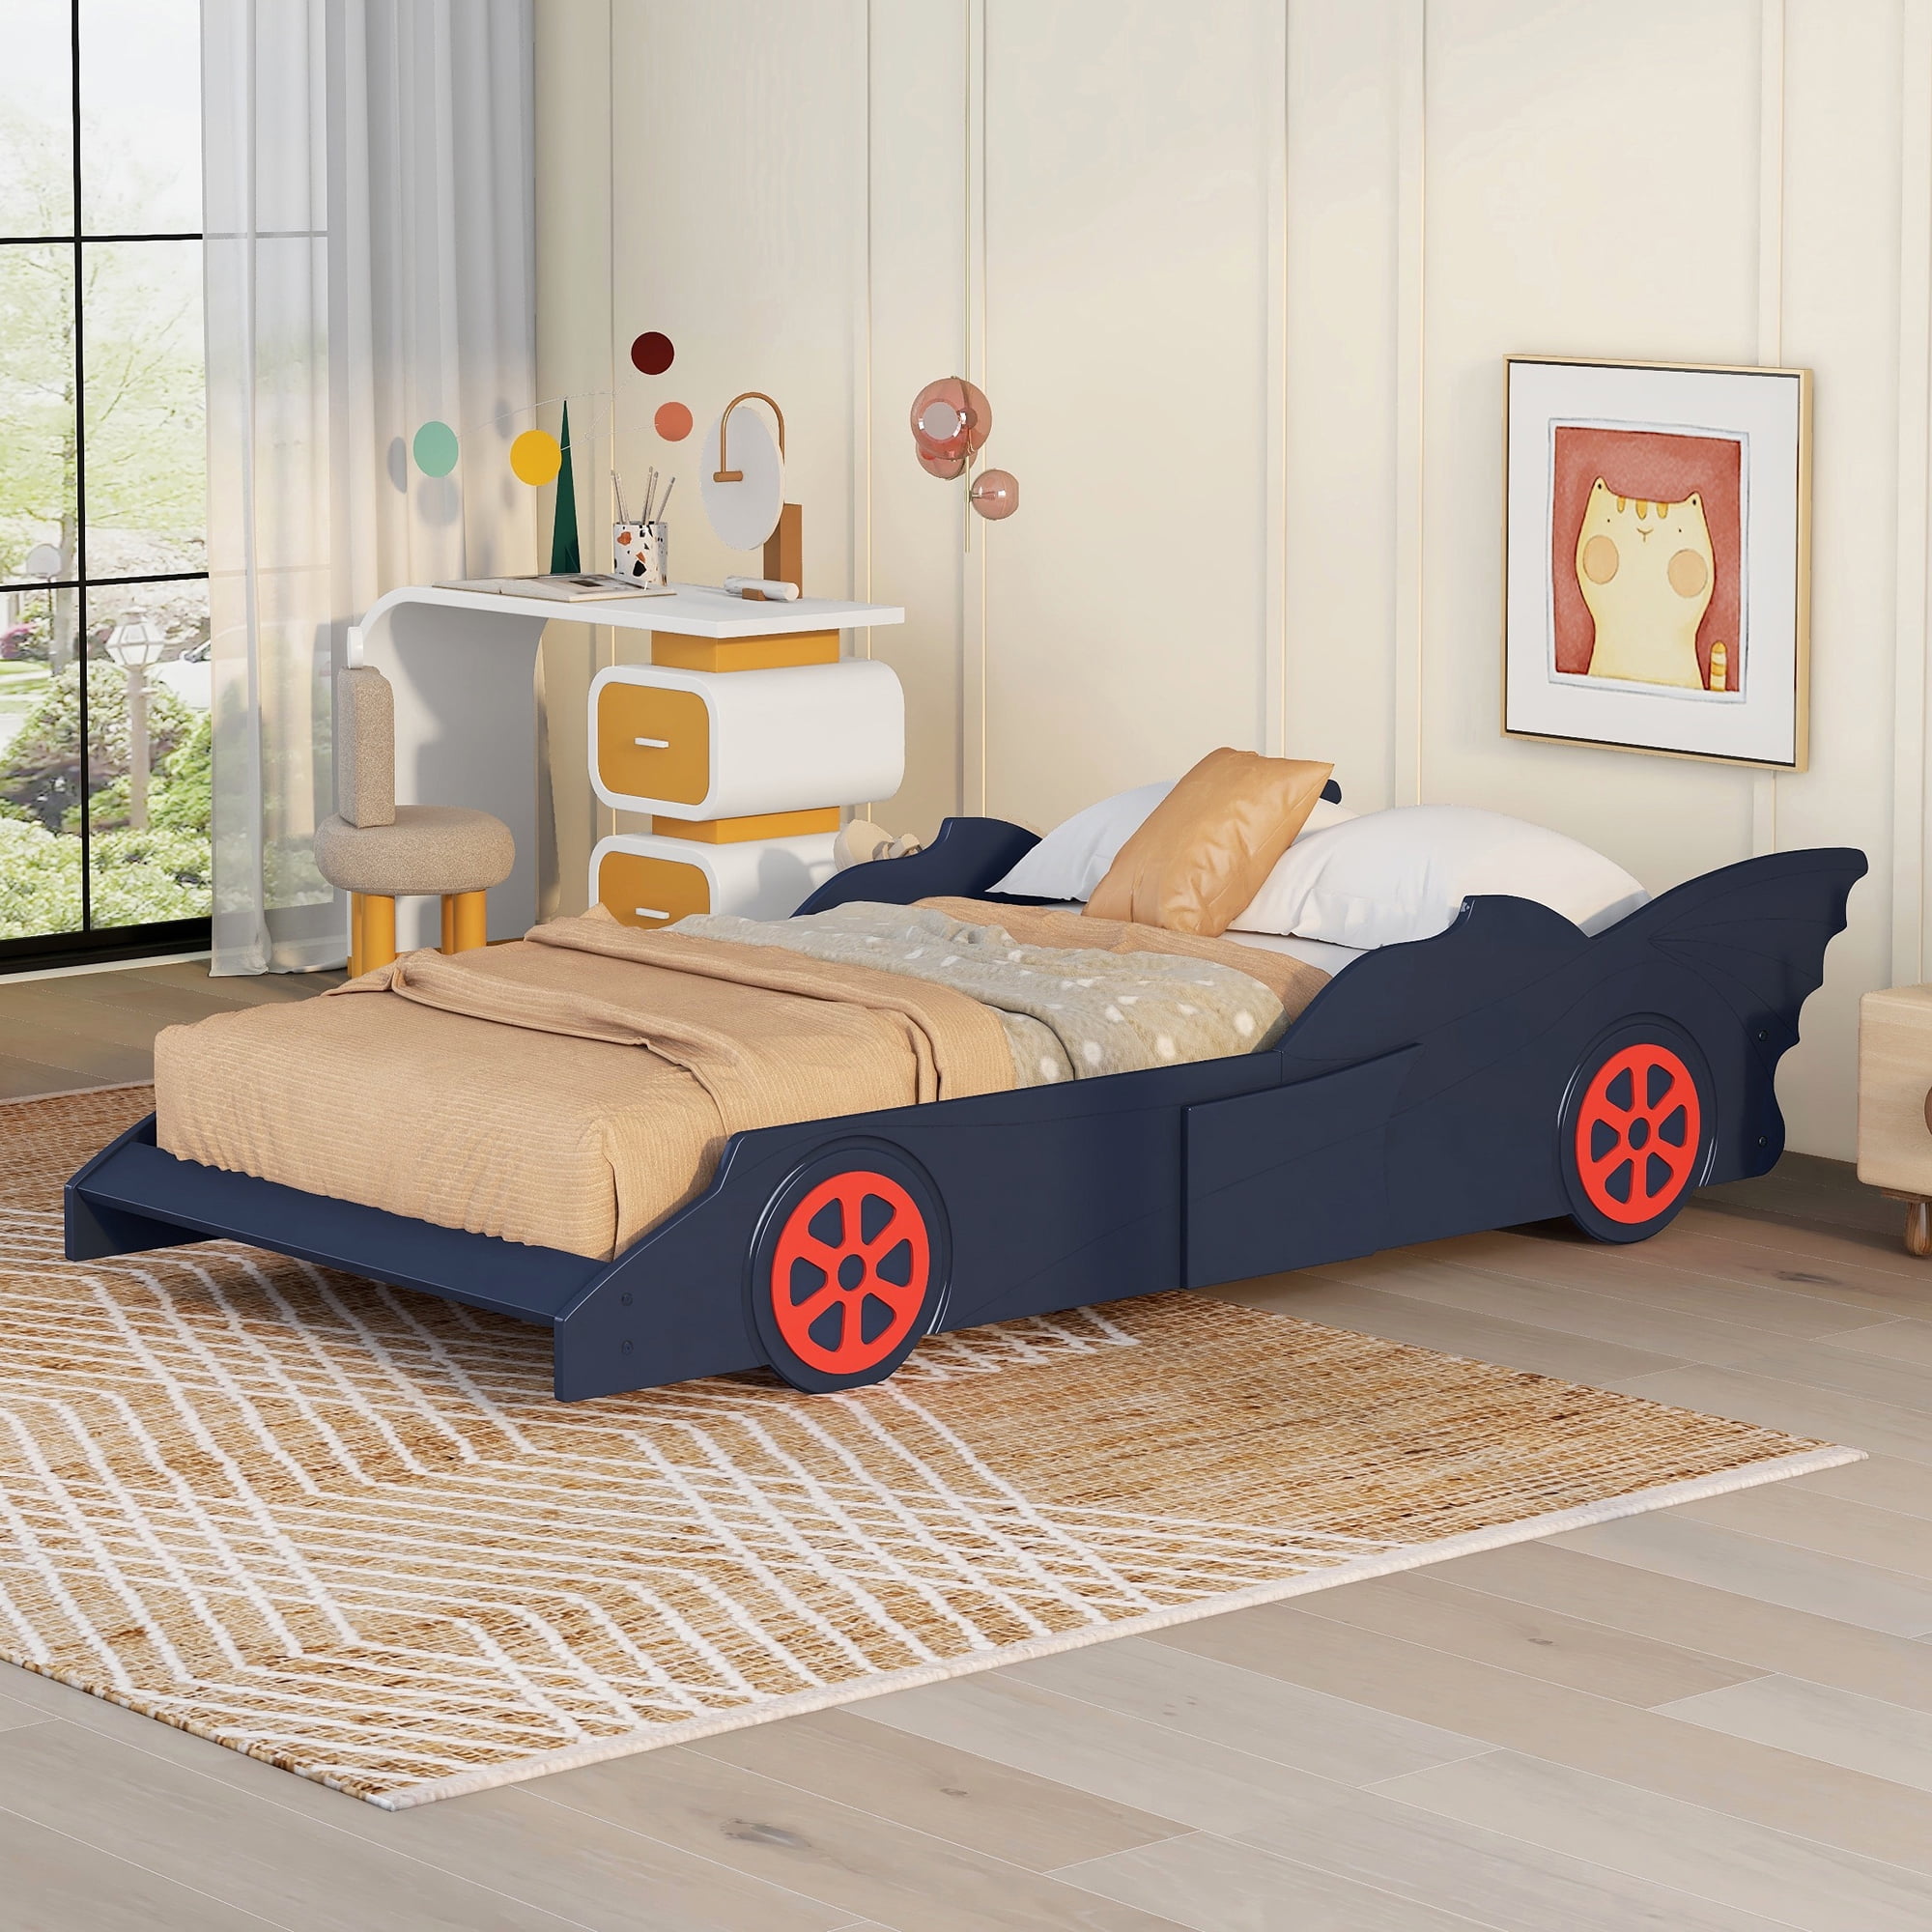 Euroco Modern Wood Race Car-Shaped Twin Size Platform Bed for Kids ...